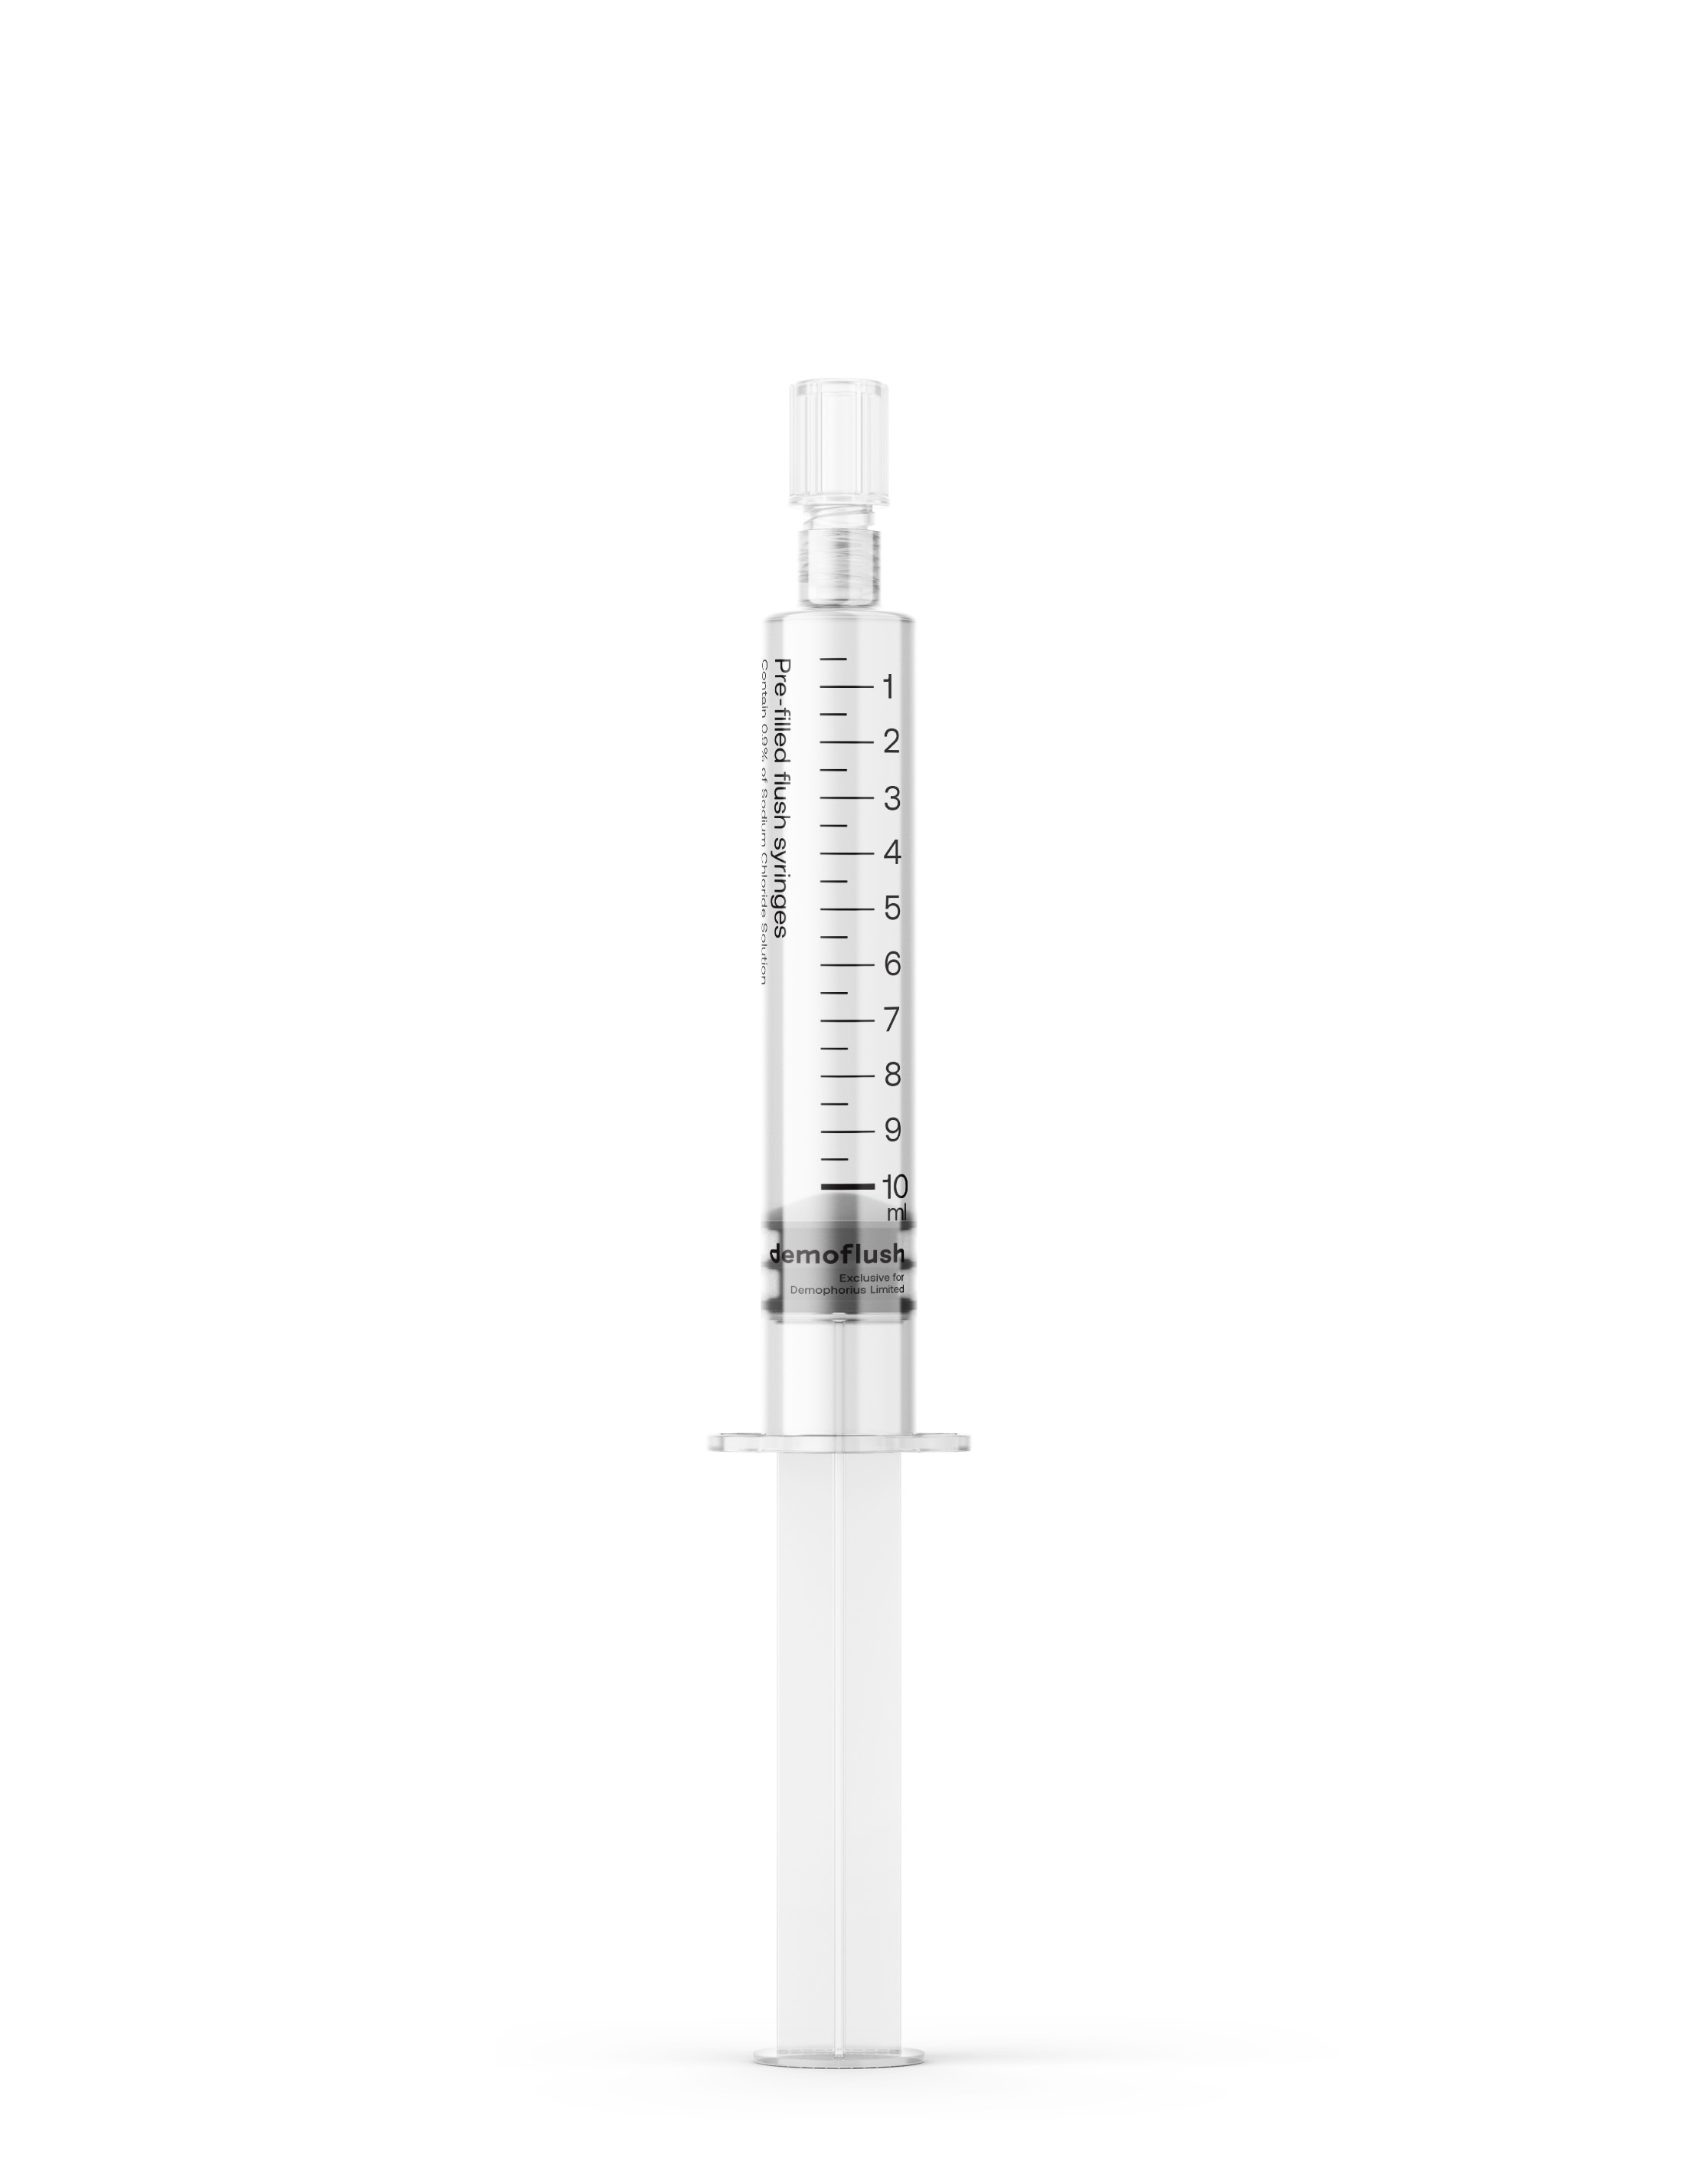 Demoflush prefilled syringes packaging design 10ml kommigraphics